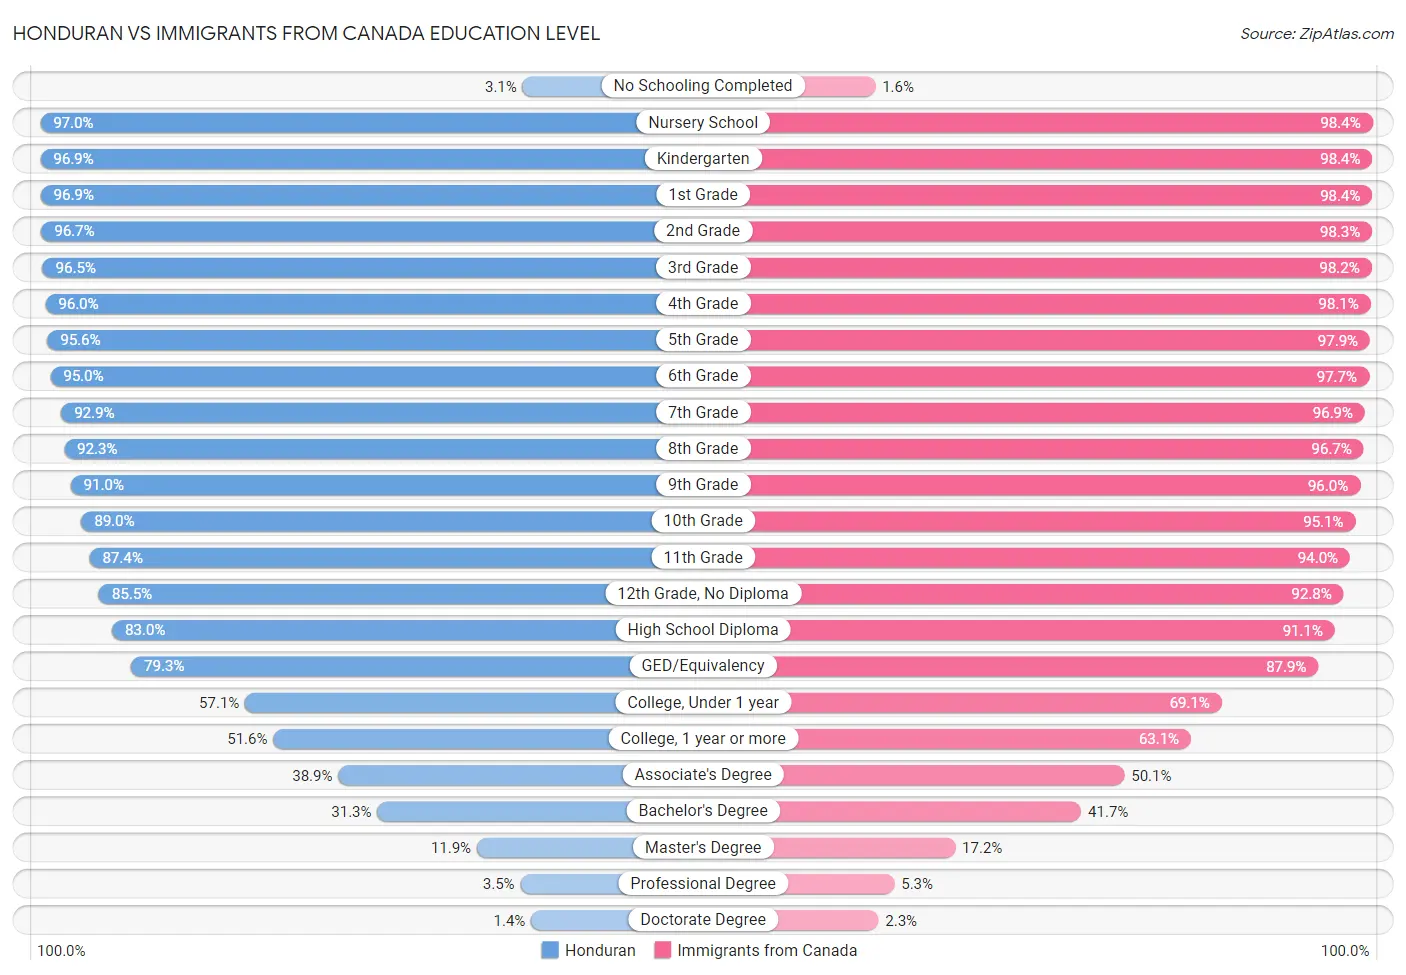 Honduran vs Immigrants from Canada Education Level